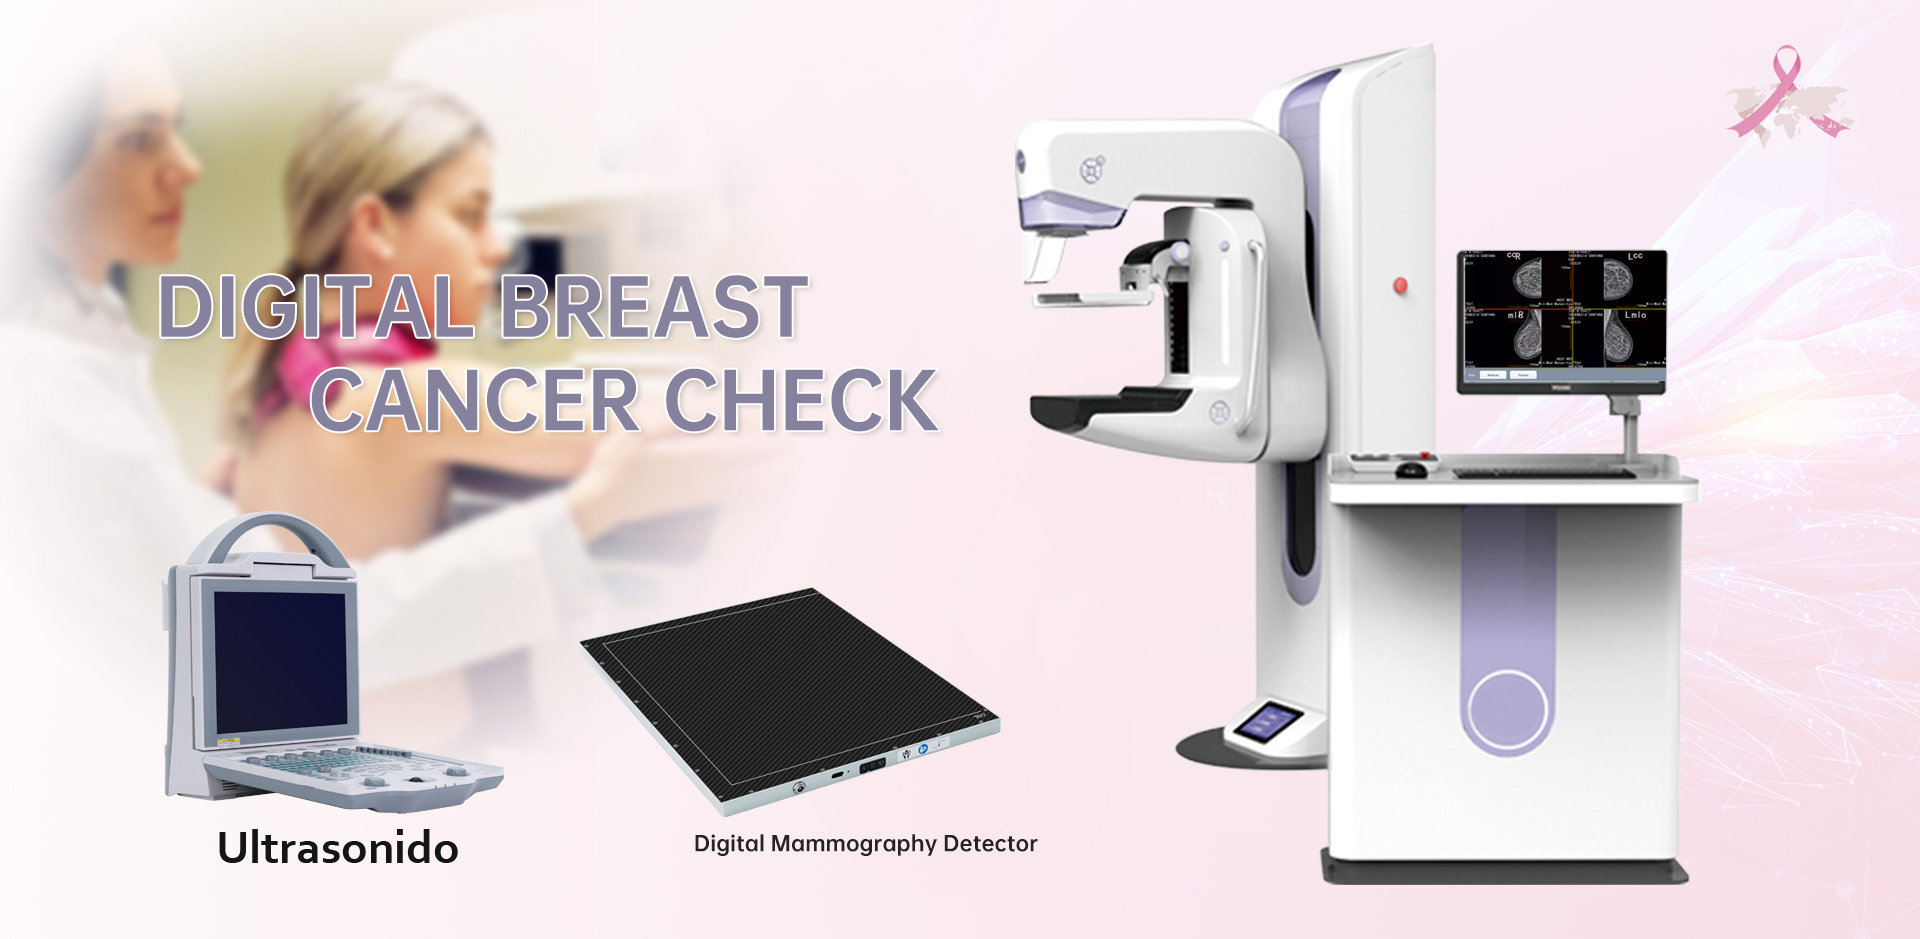 Mamografía